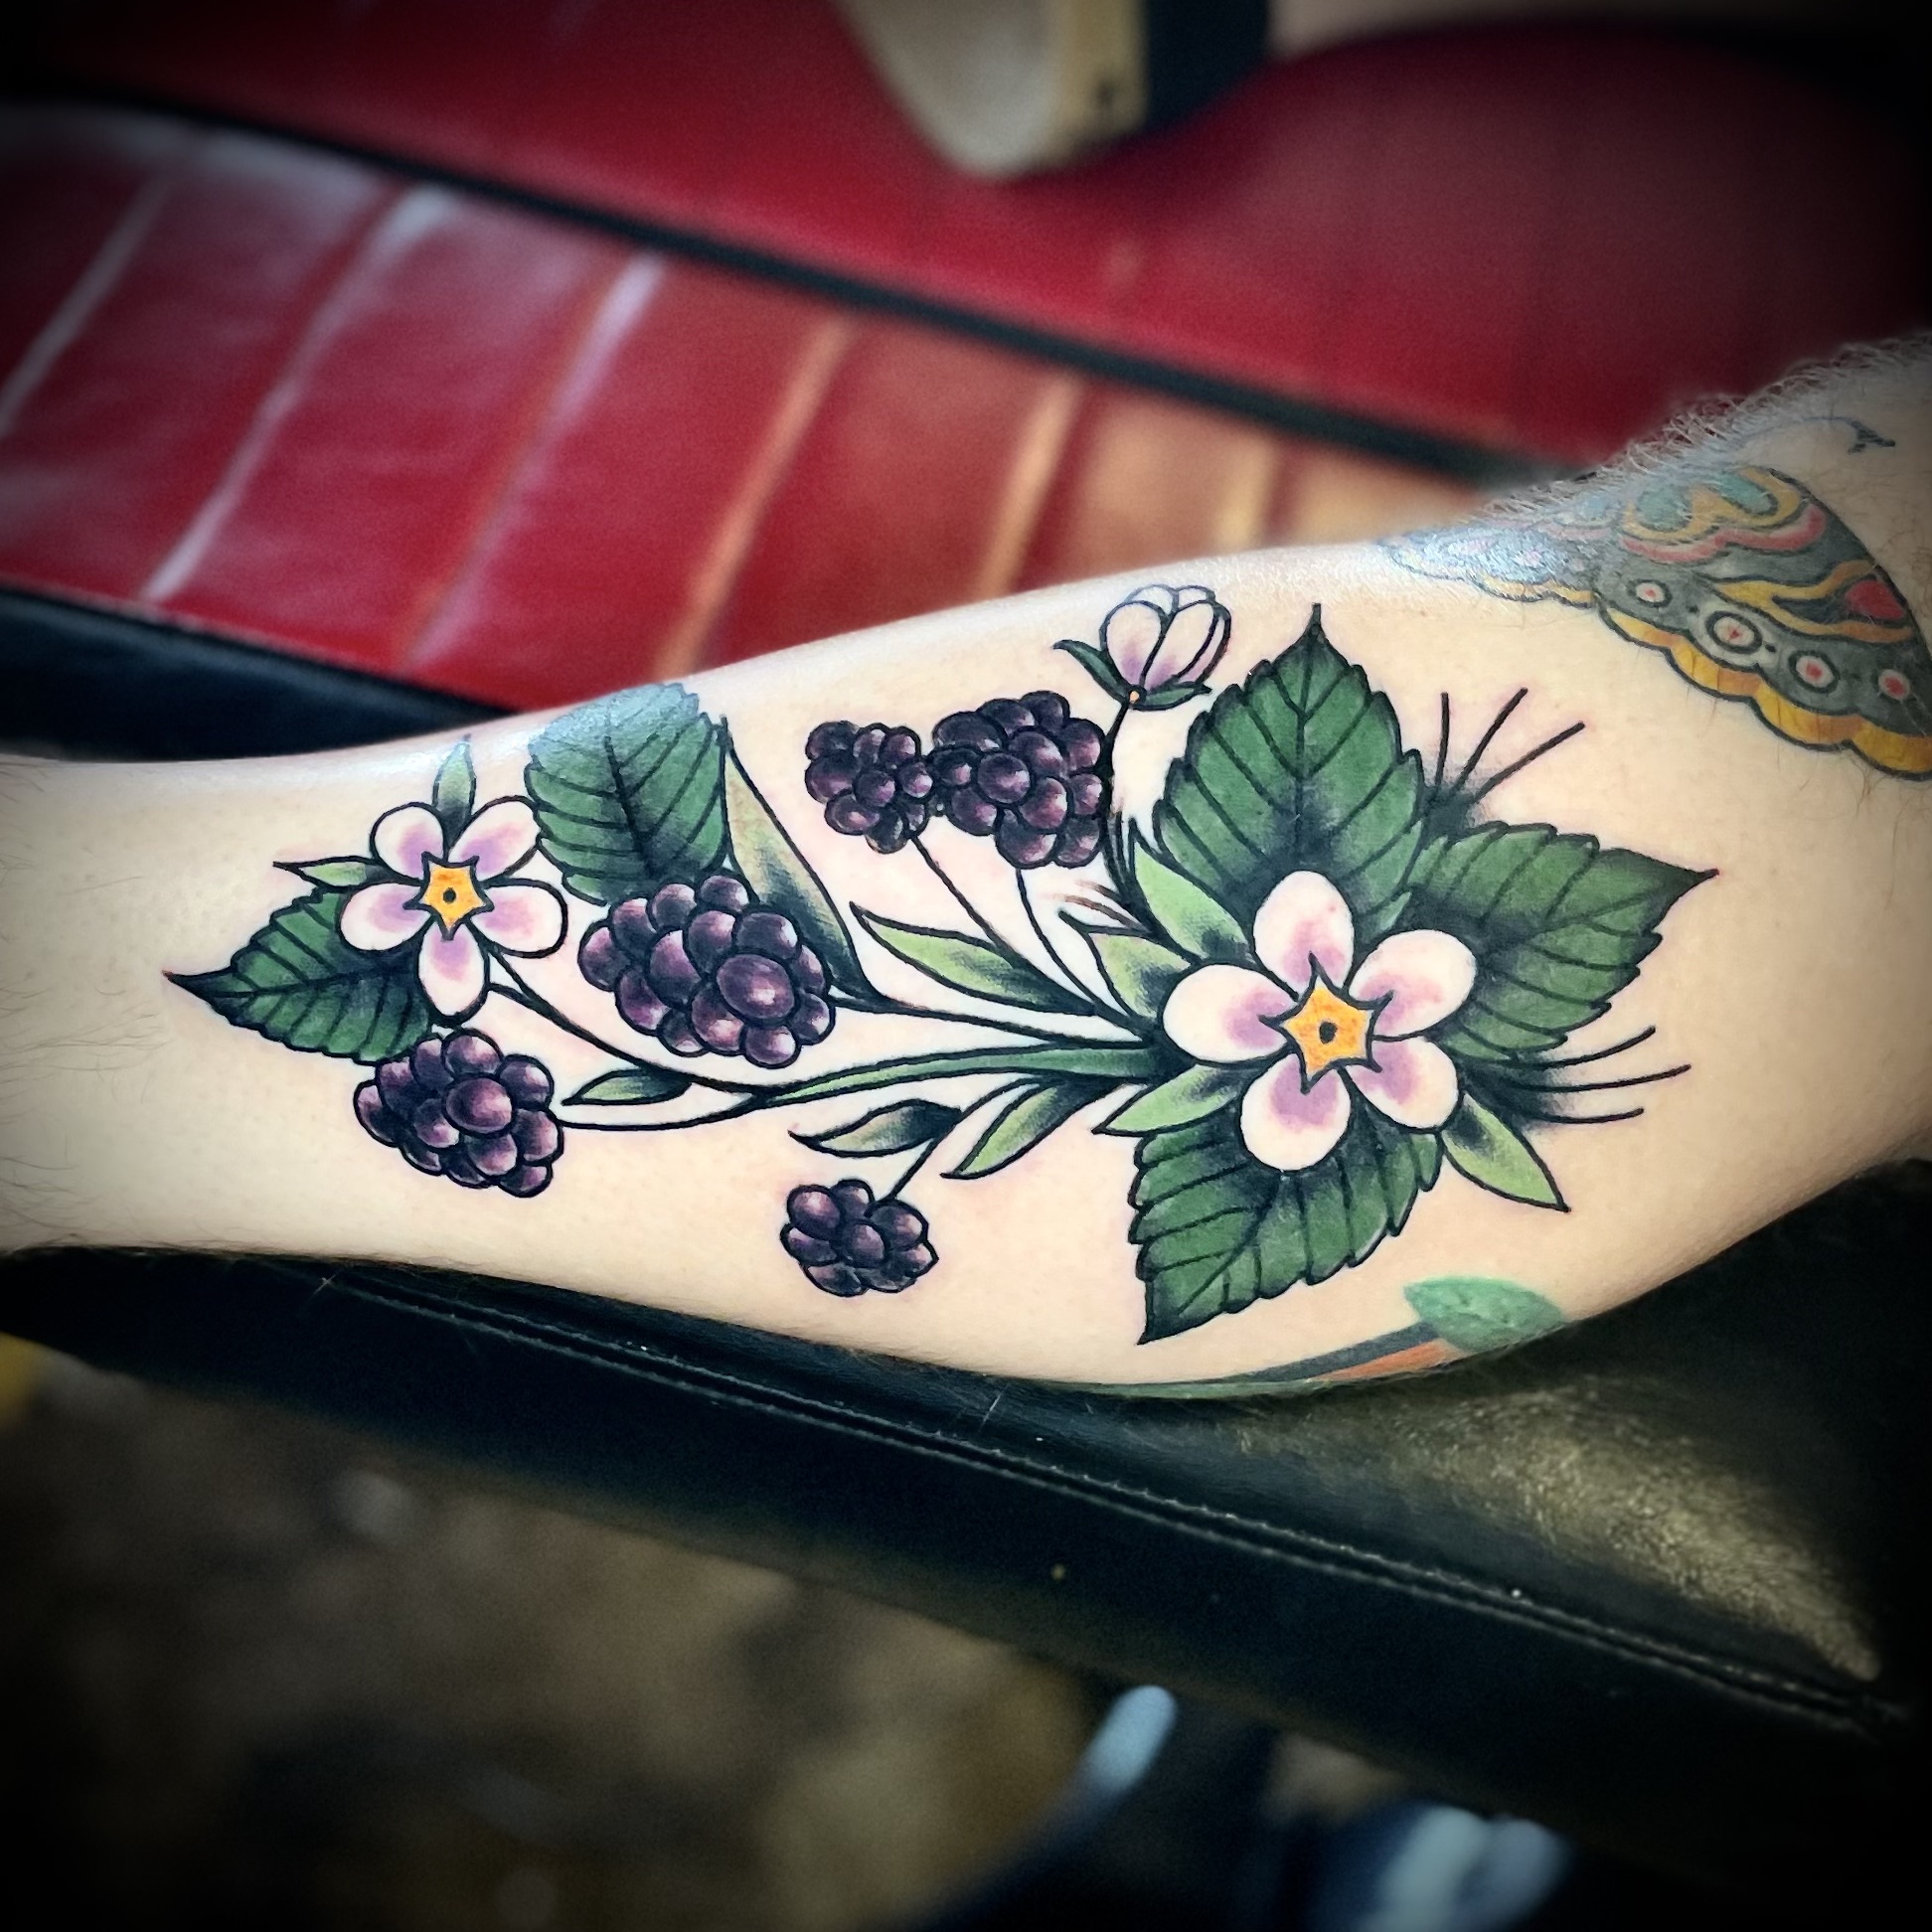 Tattoo of blackberries and flowers